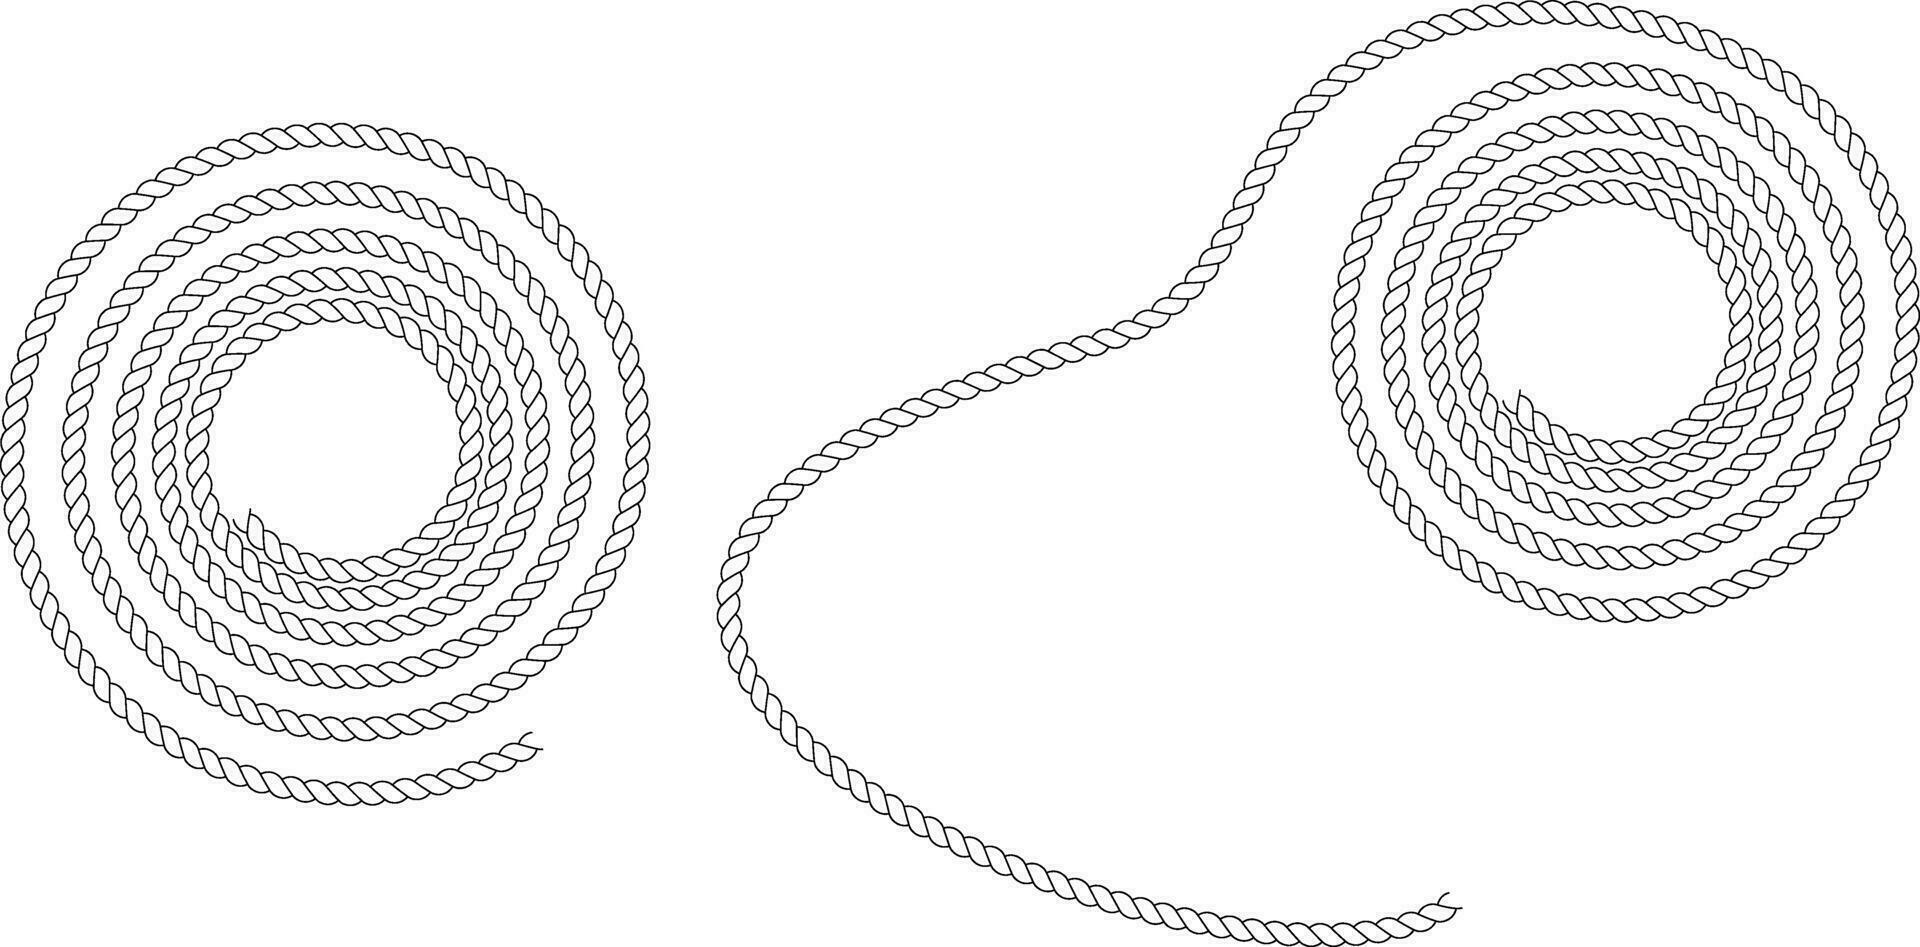 noir blanc spirale corde vecteur